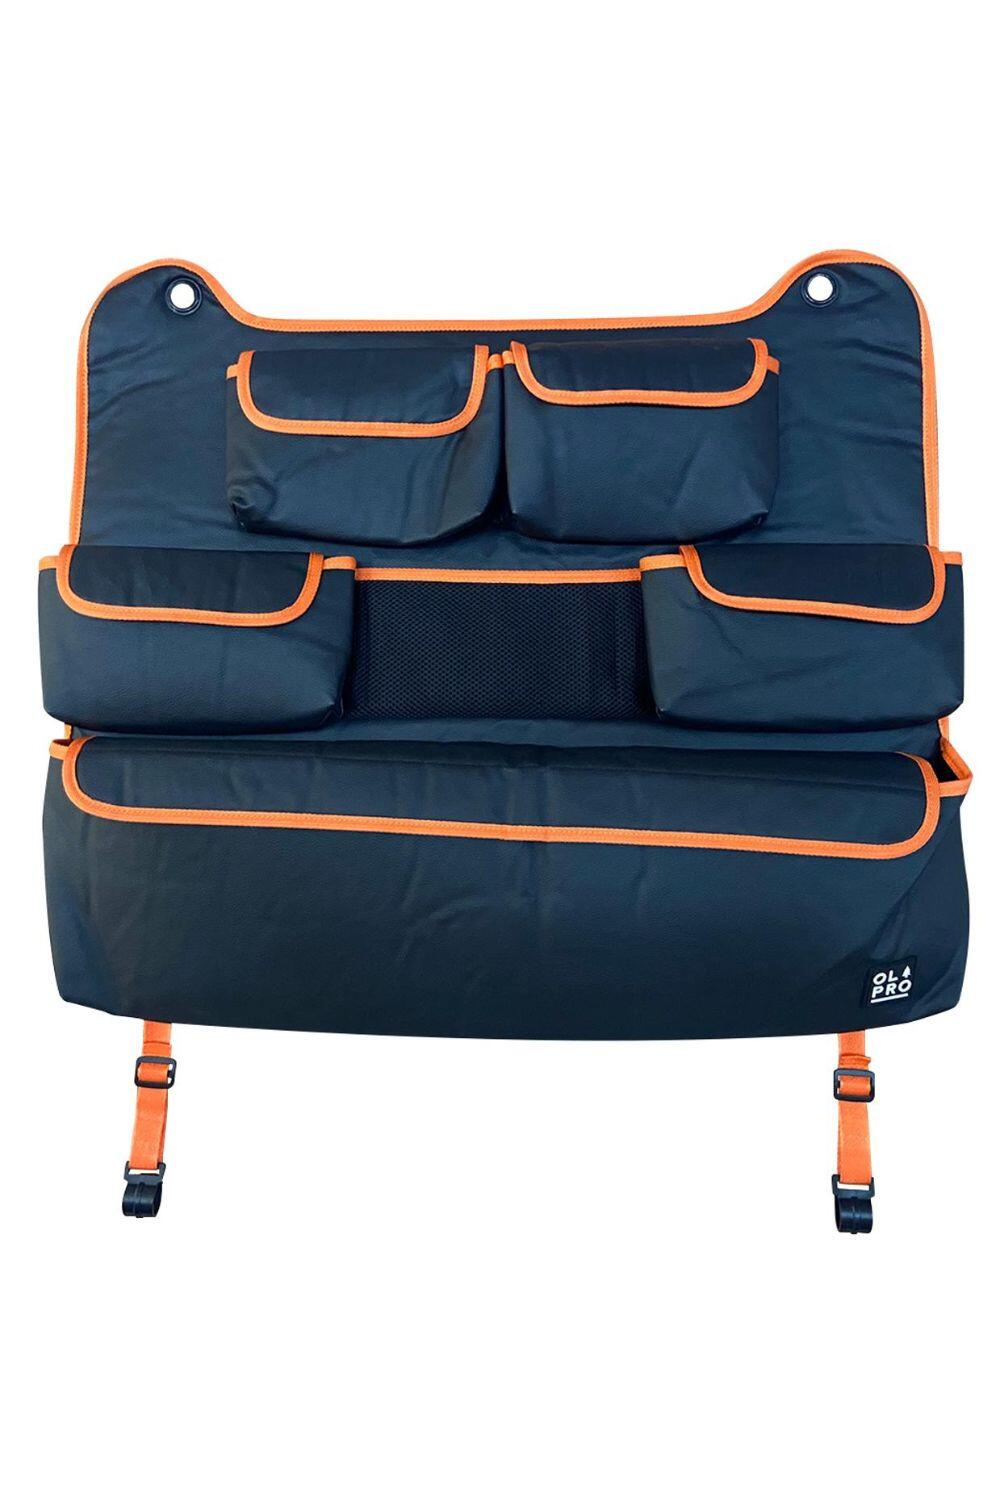 OLPRO Double Seat Organiser Orange 1/3